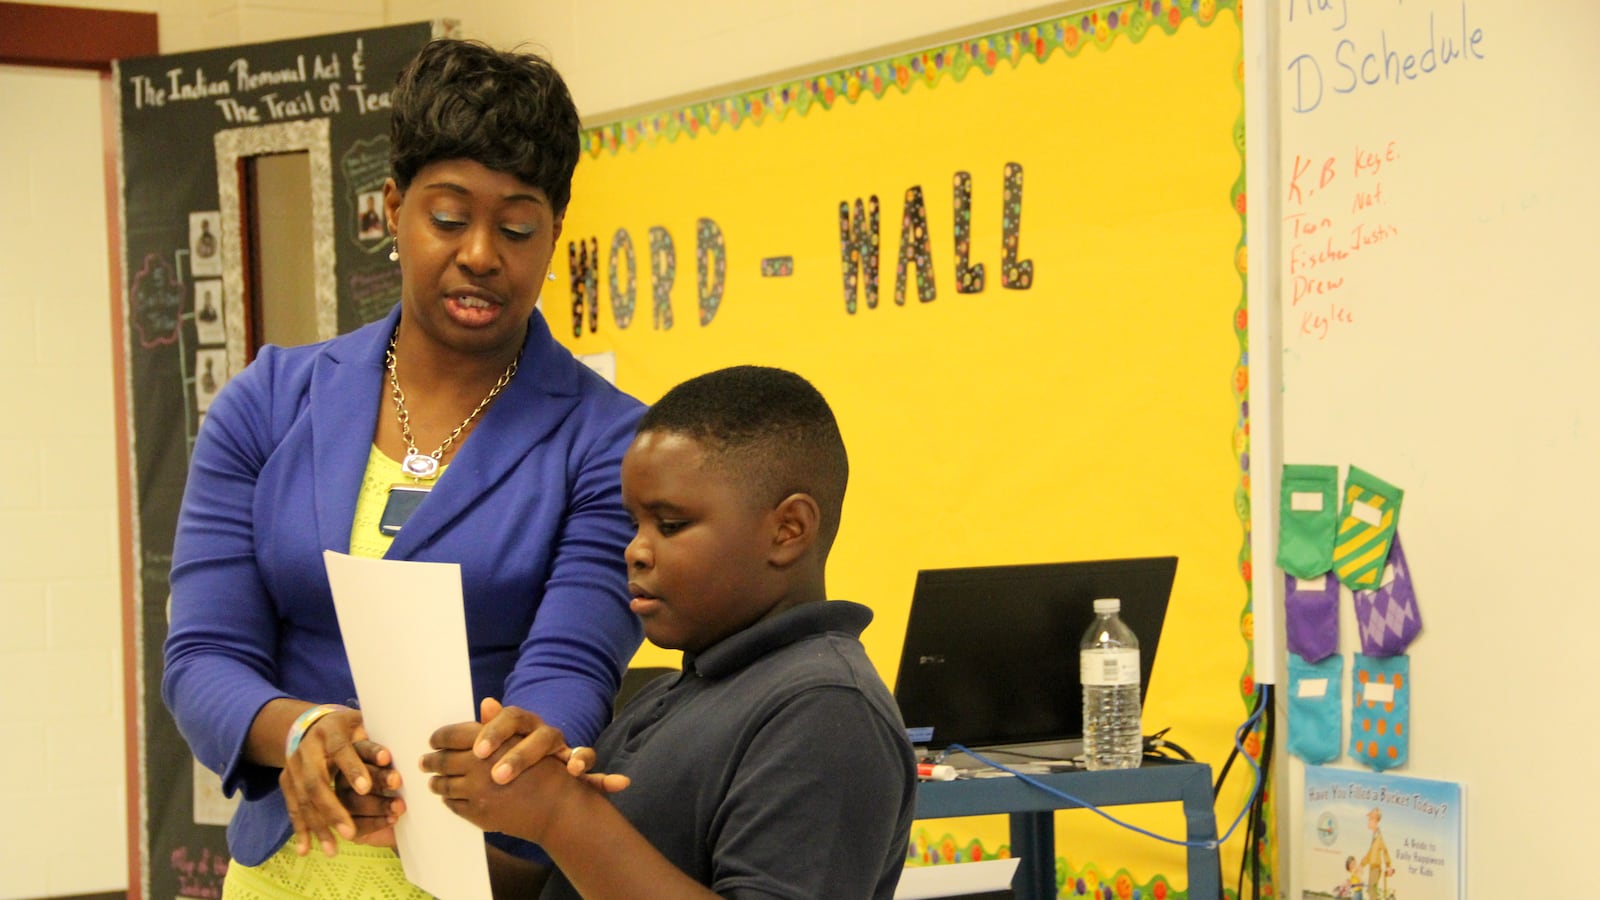 Fourth grade ELA teacher and PBS digital innovator Sharon Clark helps a student during class at East Side Intermediate School in Brownsville,Tenn.